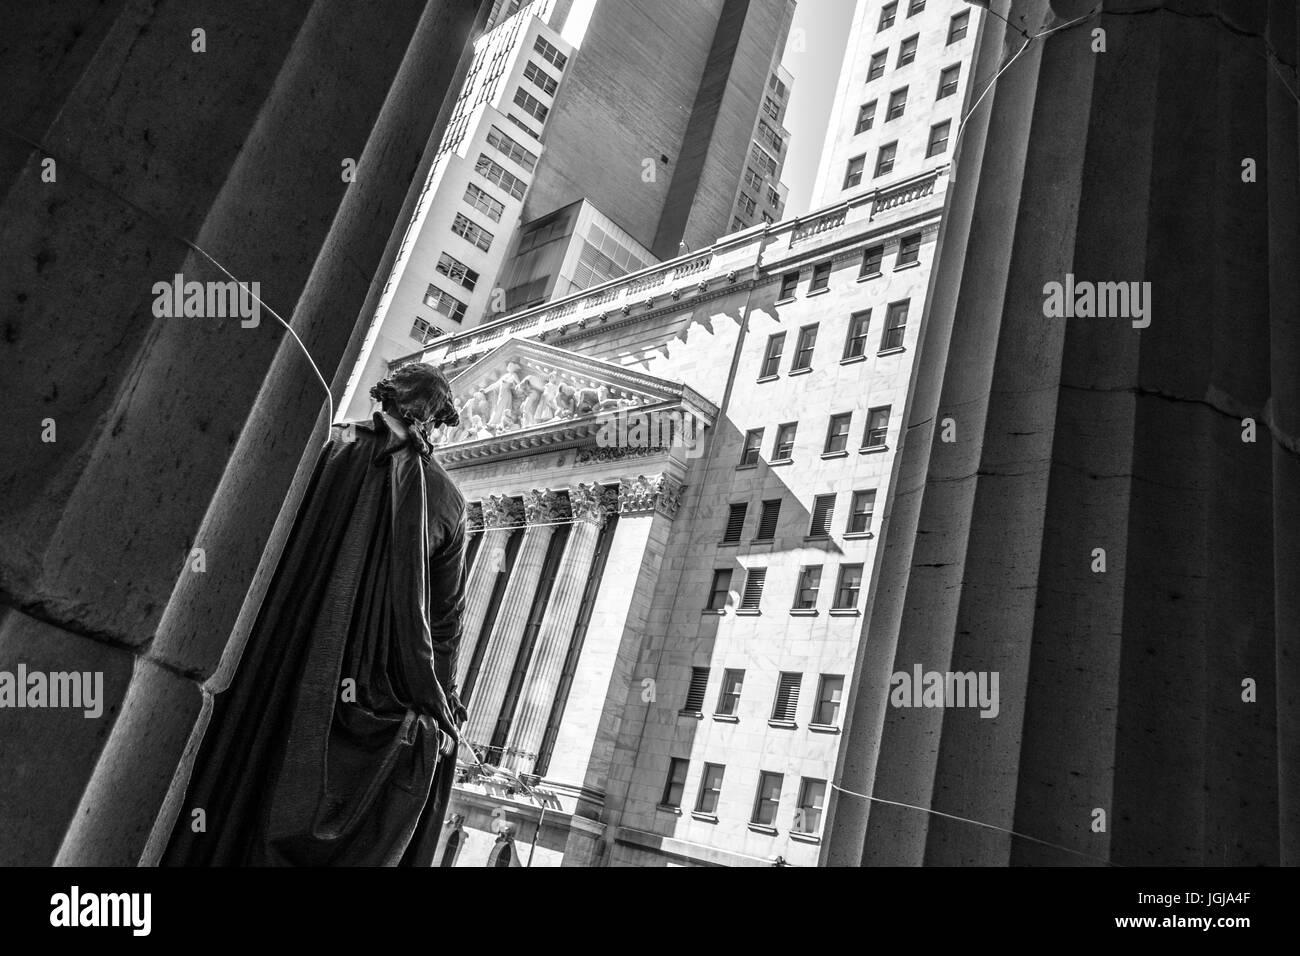 New York Stock Exchange from behind president George Washington statue in Wall street, Manhattan Stock Photo